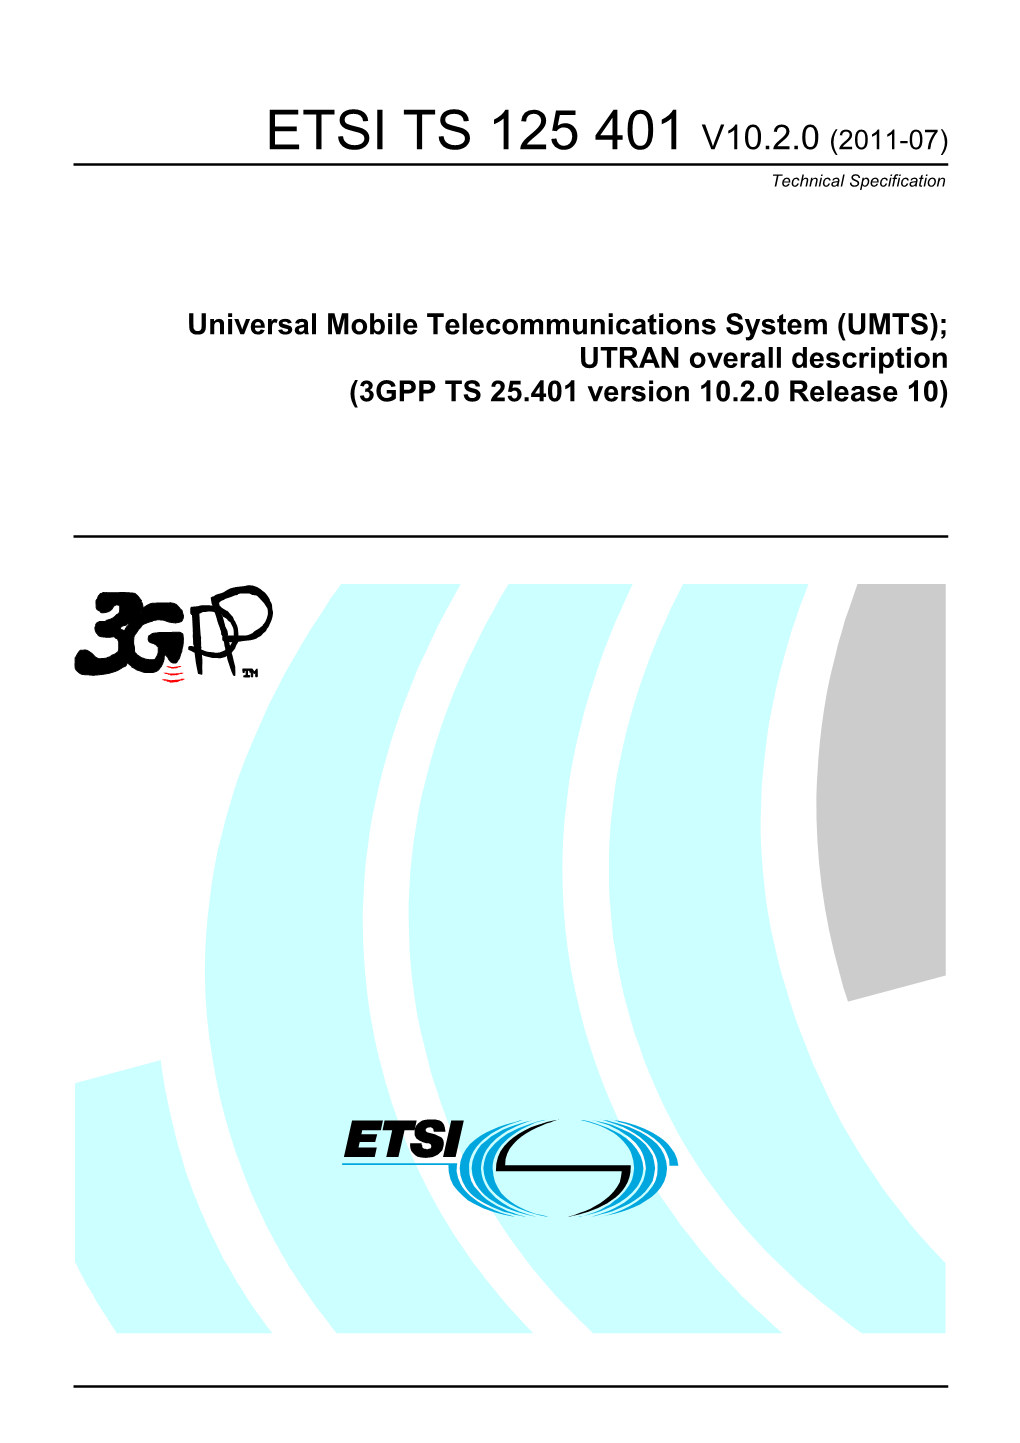 ETSI TS 125 401 V10.2.0 (2011-07) Technical Specification